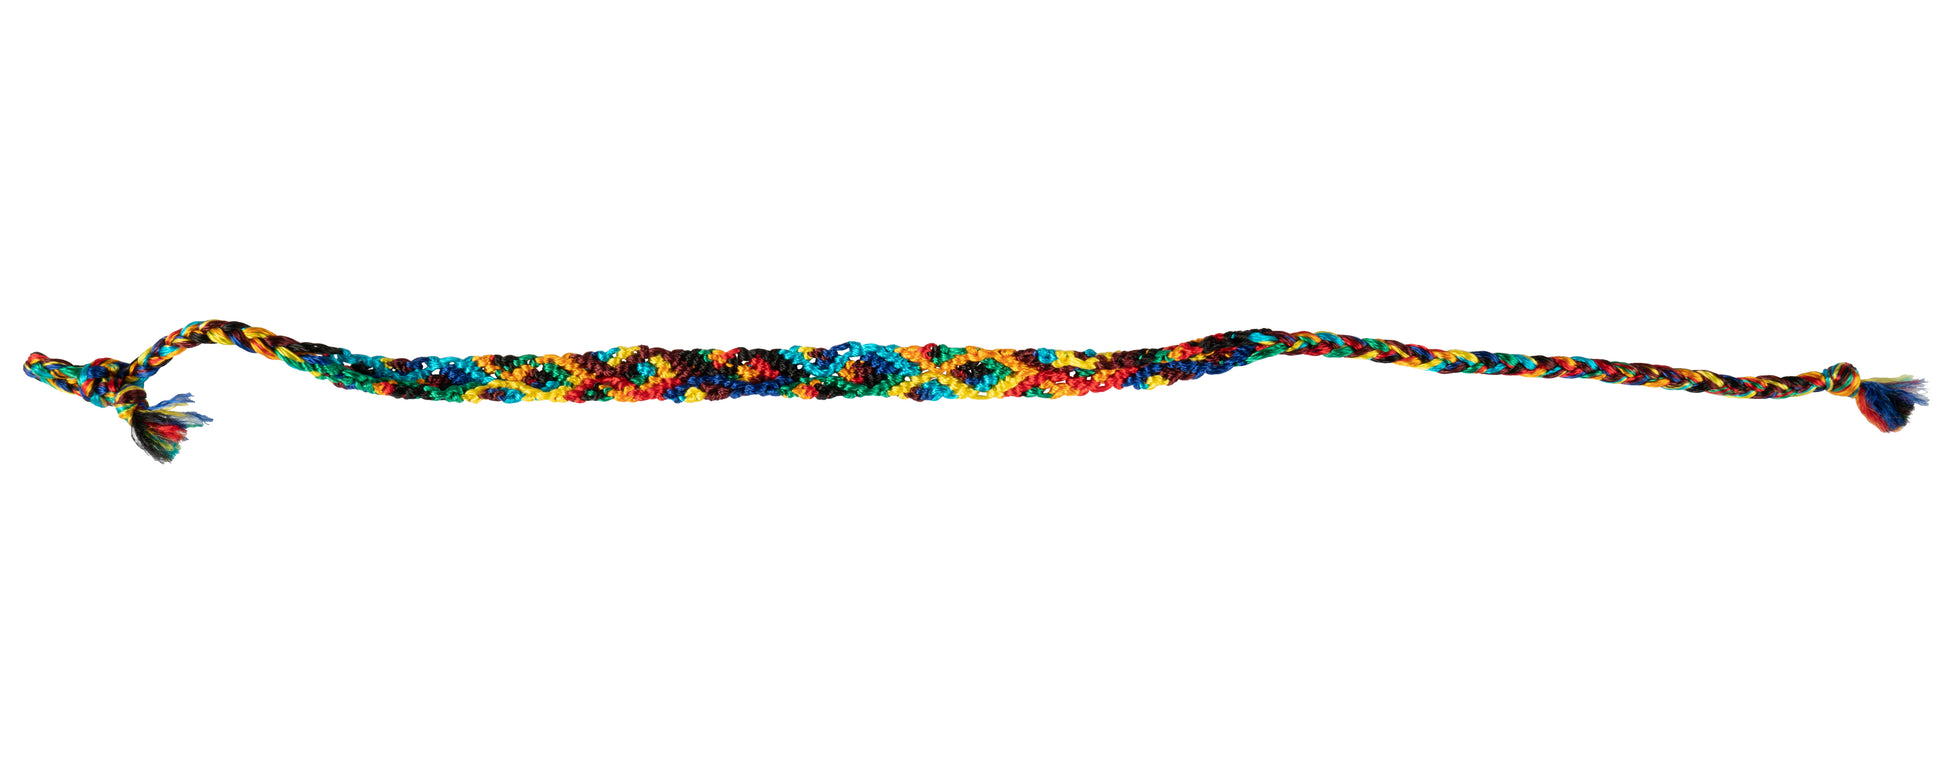 Handmade Friendship Bracelets - Vibrant Fabric Bracelets for Celebrating Friendship - CCCollections